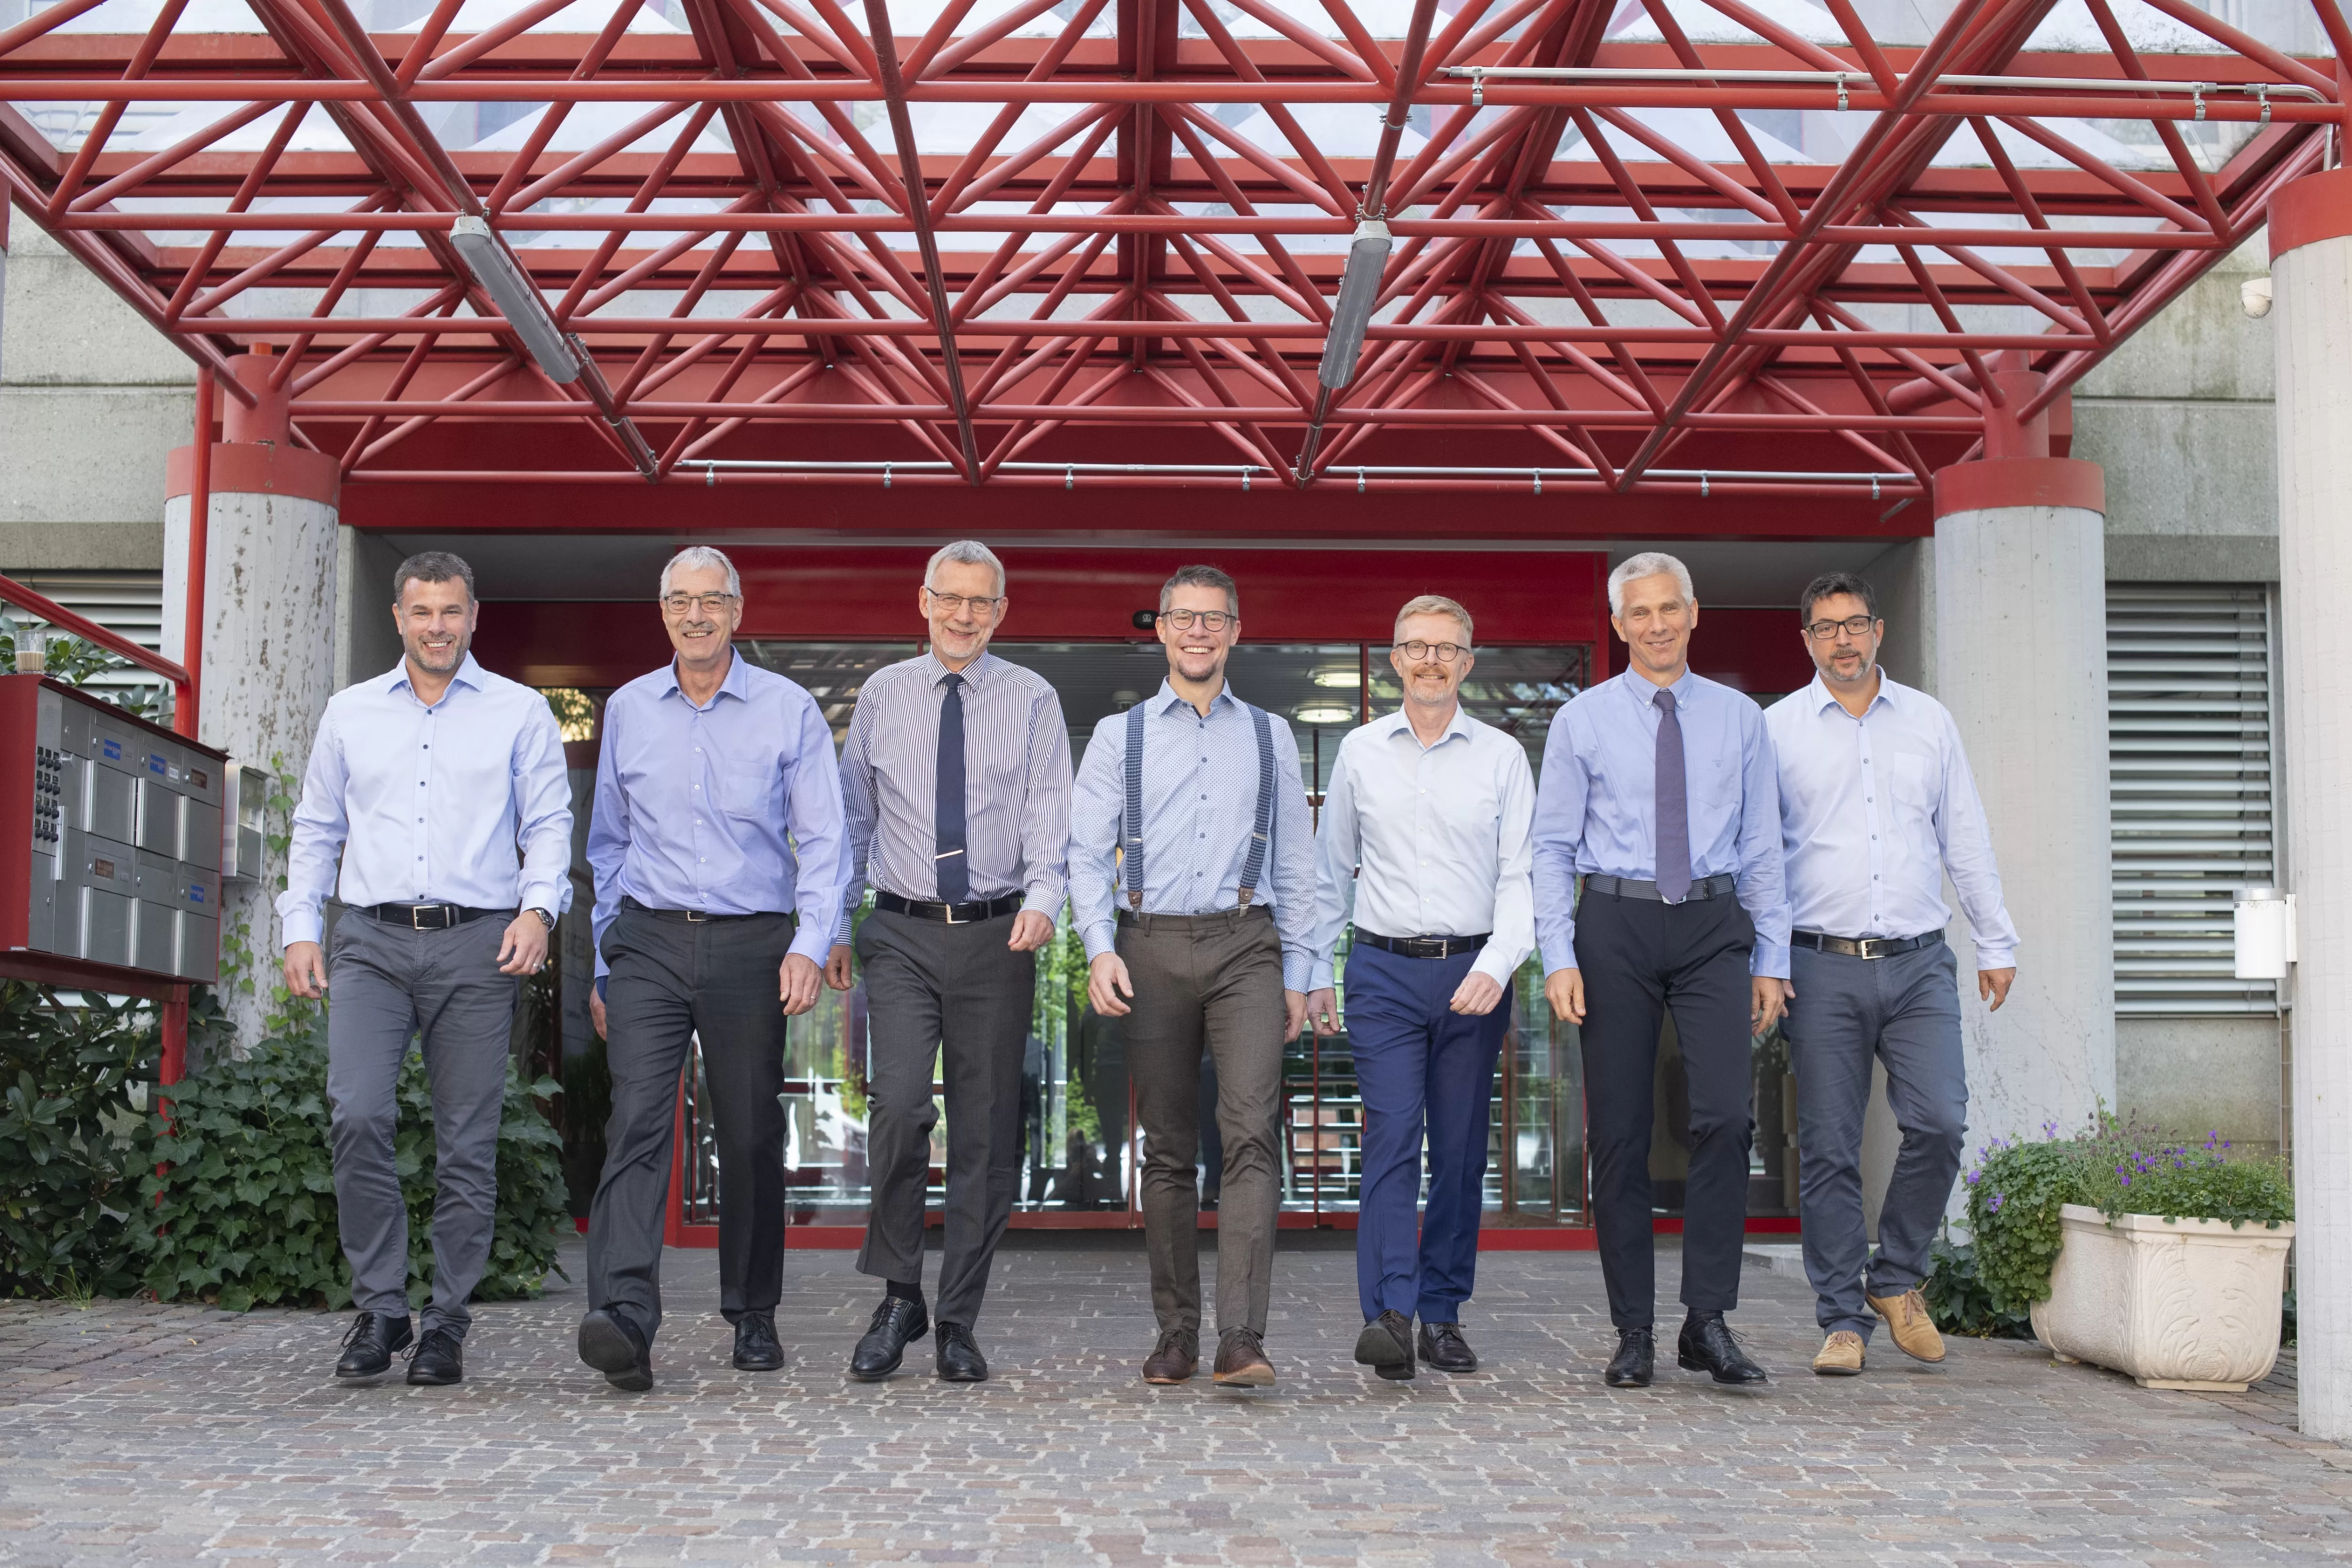 The technical divisions are headed by (from left to right): Severin Wälchli, Reto Beutler, Markus Fritschi (Deputy CEO), Philipp Senn, Tim Vietor, Matthias Braun (CEO) und Maurus Alig. Photo: Maria Schmid